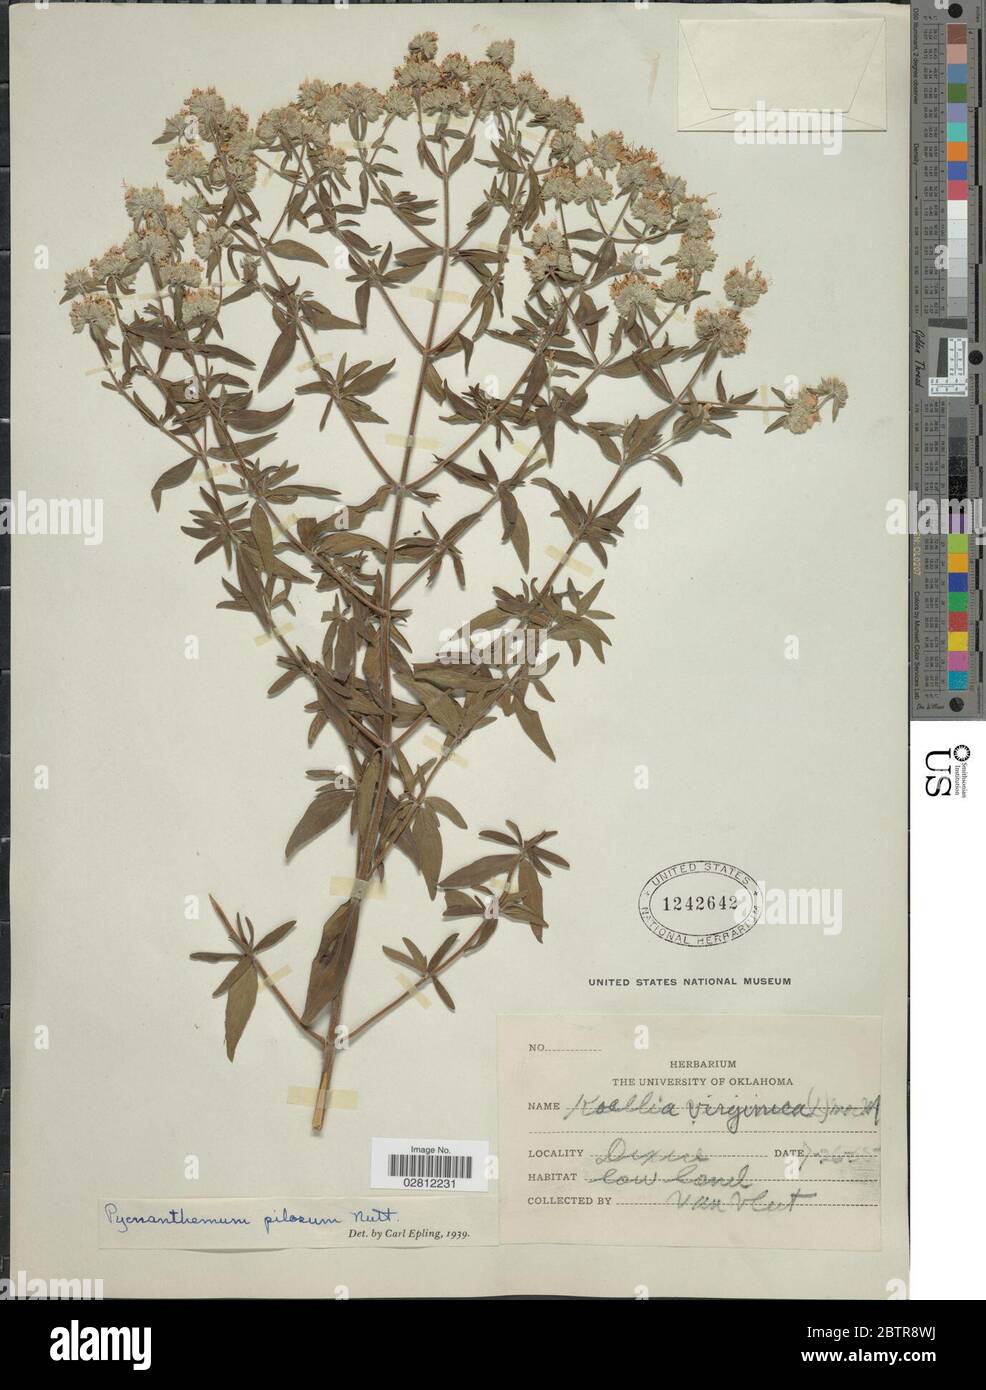 Pycnanthemum pilosum Nutt. Stock Photo